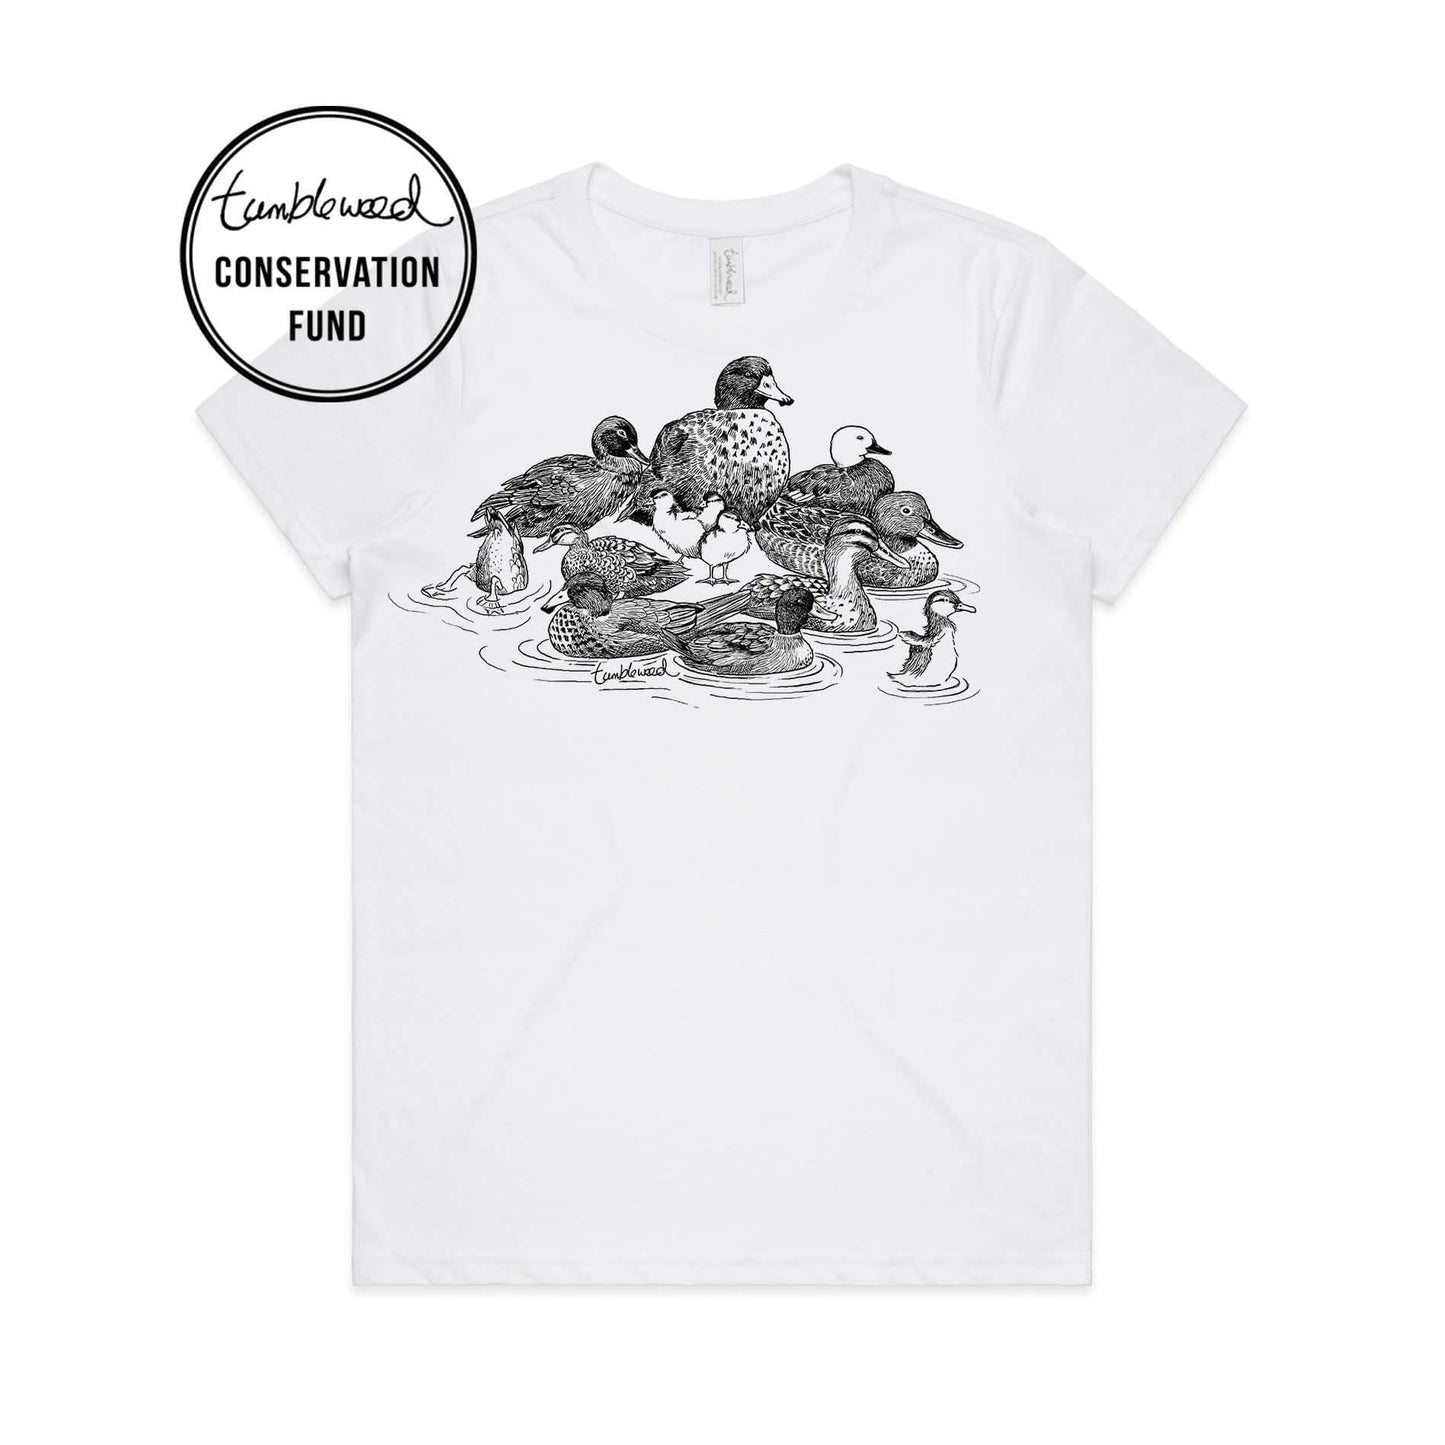 Grey marle, female t-shirt featuring a screen printed NZ Ducks design.